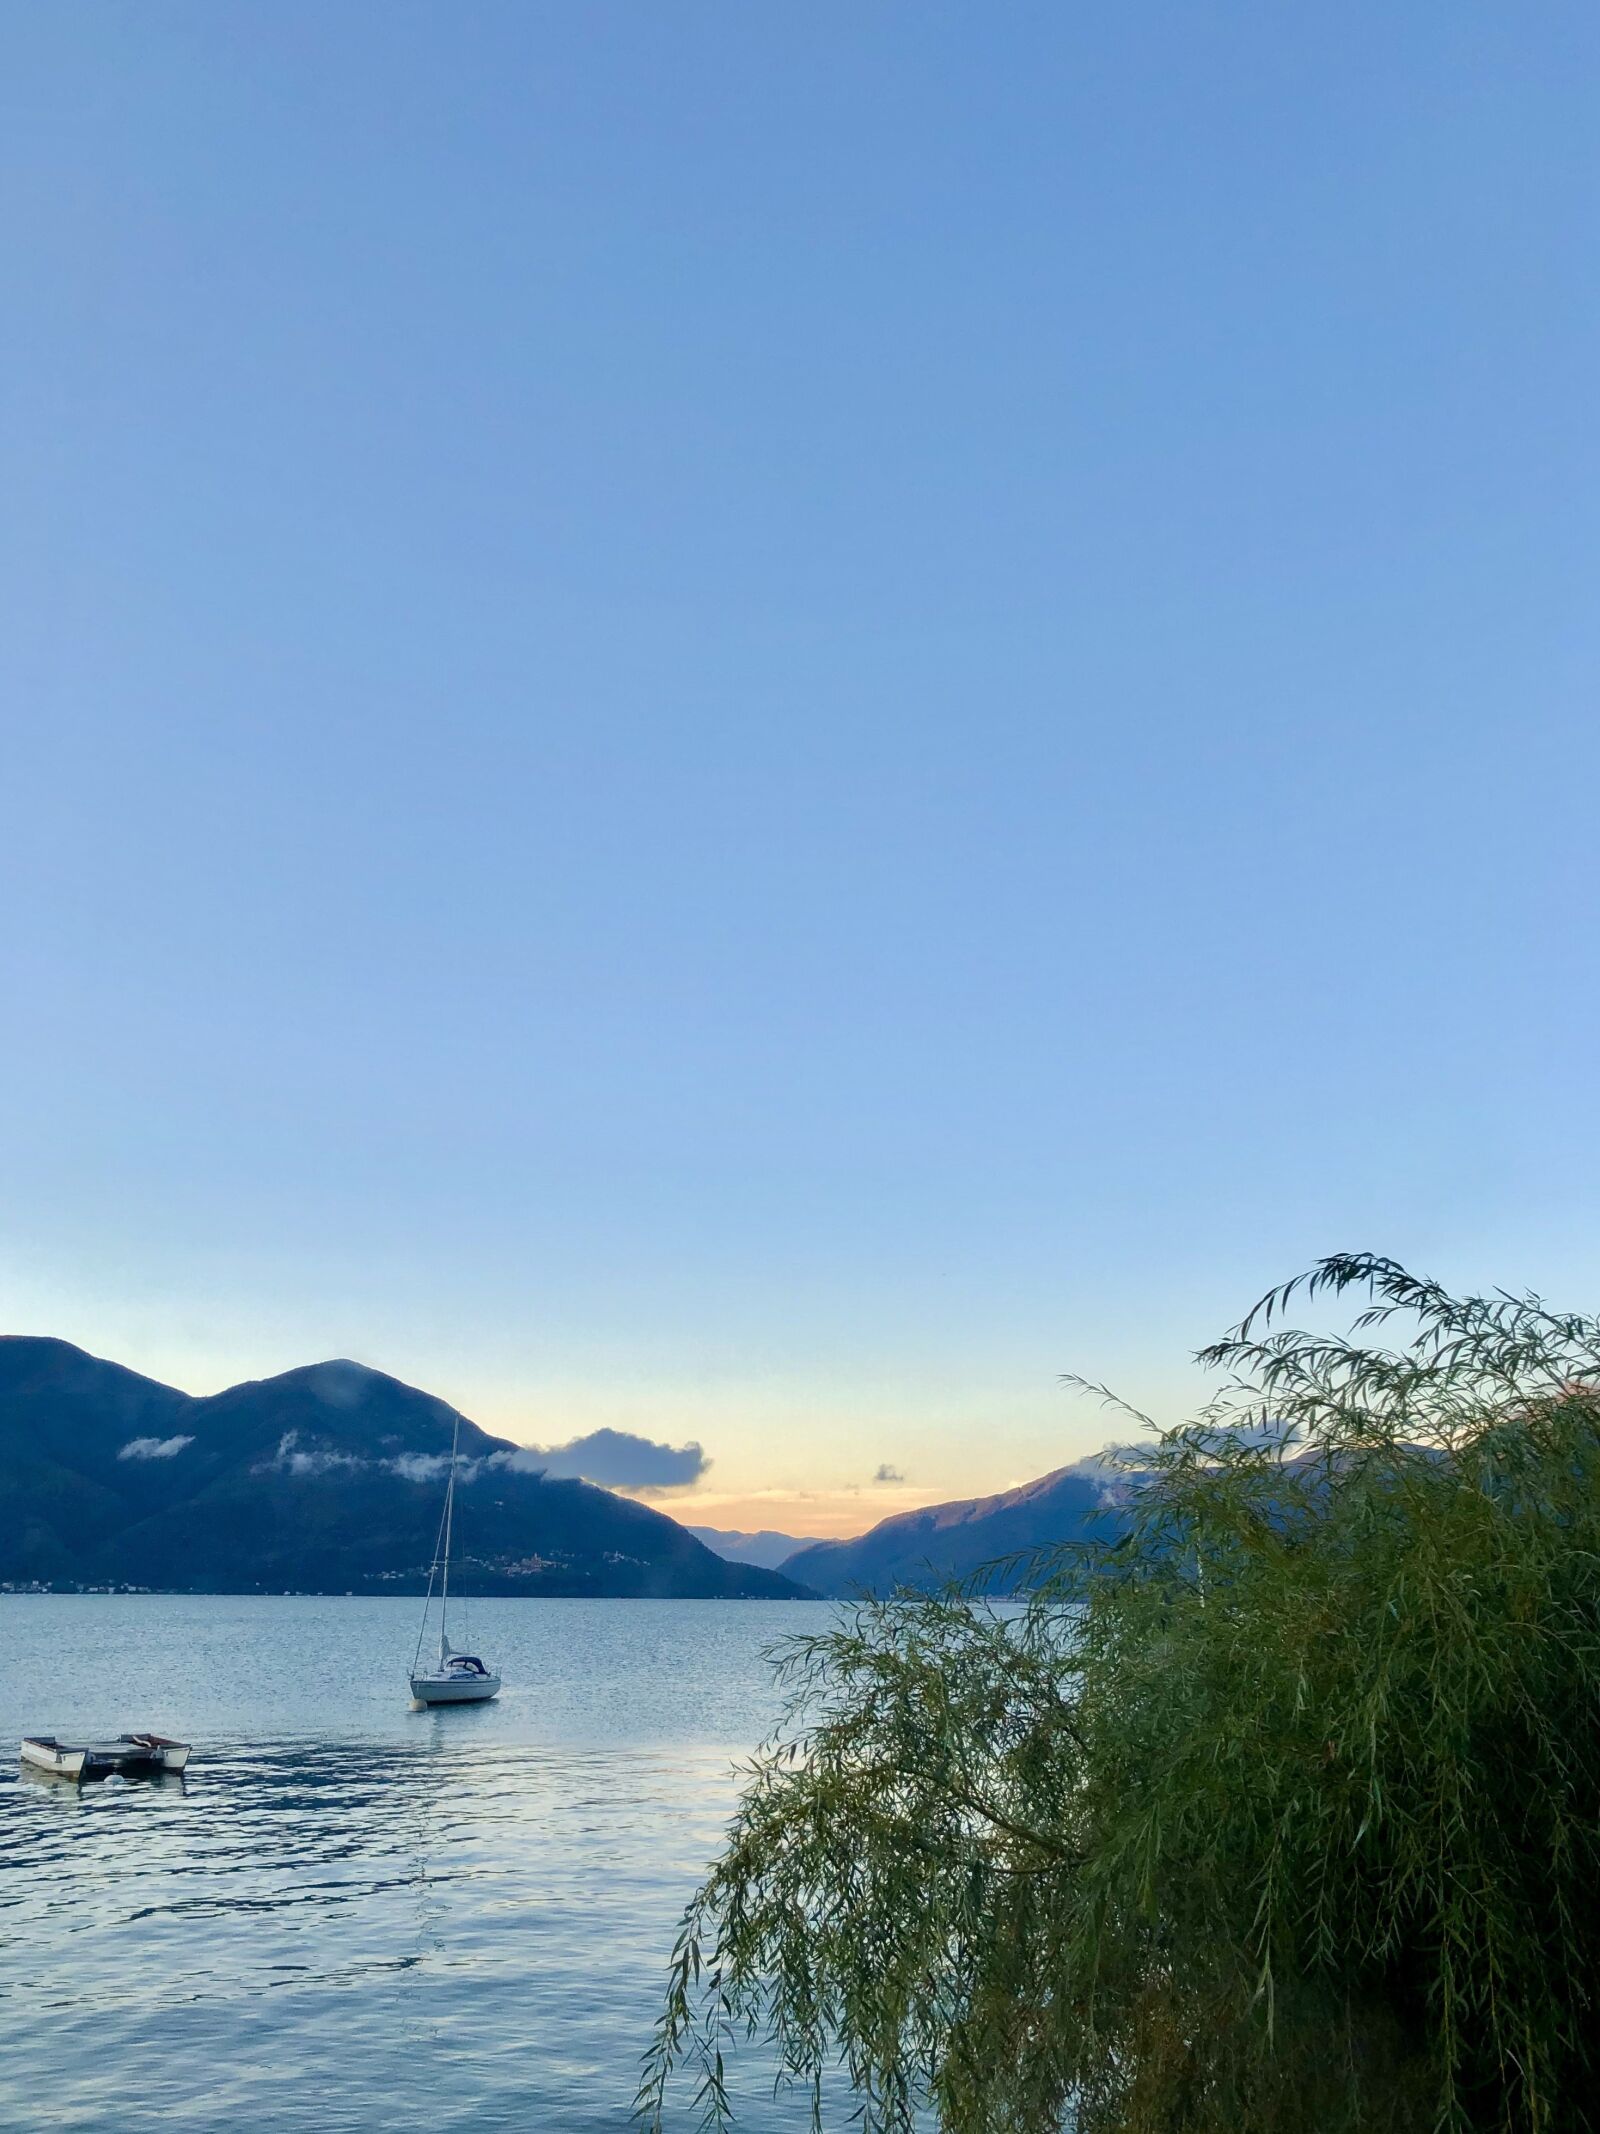 Apple iPhone X + iPhone X back dual camera 4mm f/1.8 sample photo. Ticino, lago maggiore, sunset photography